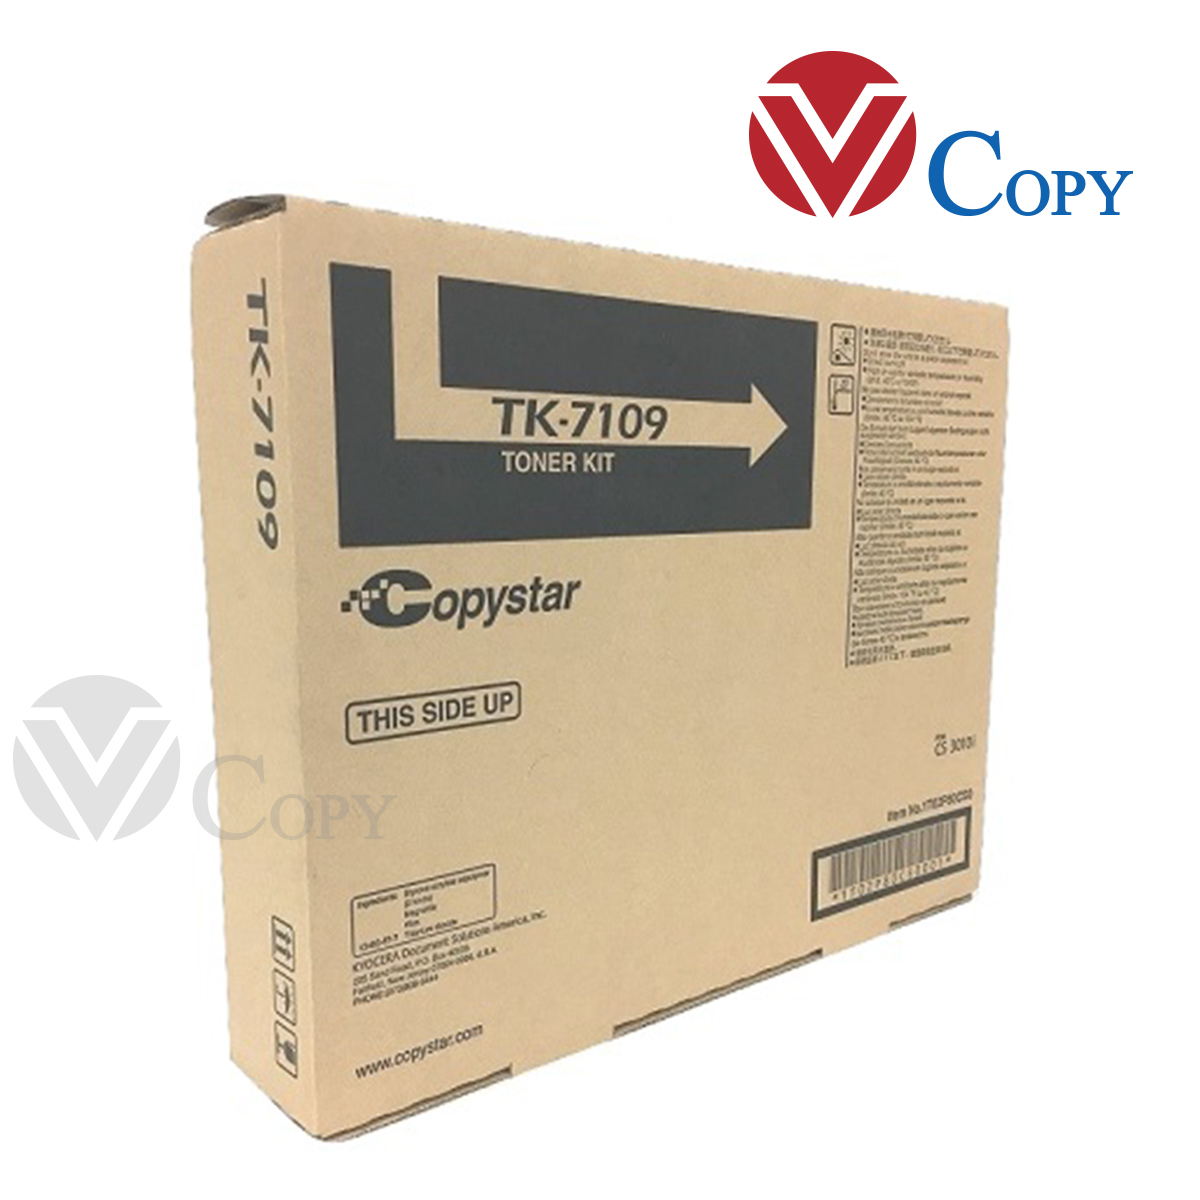 Mực Thương hiệu dùng cho máy Photocopy Kyocera TASKalfa 3010i - Hộp mực TK 7109 (650g)